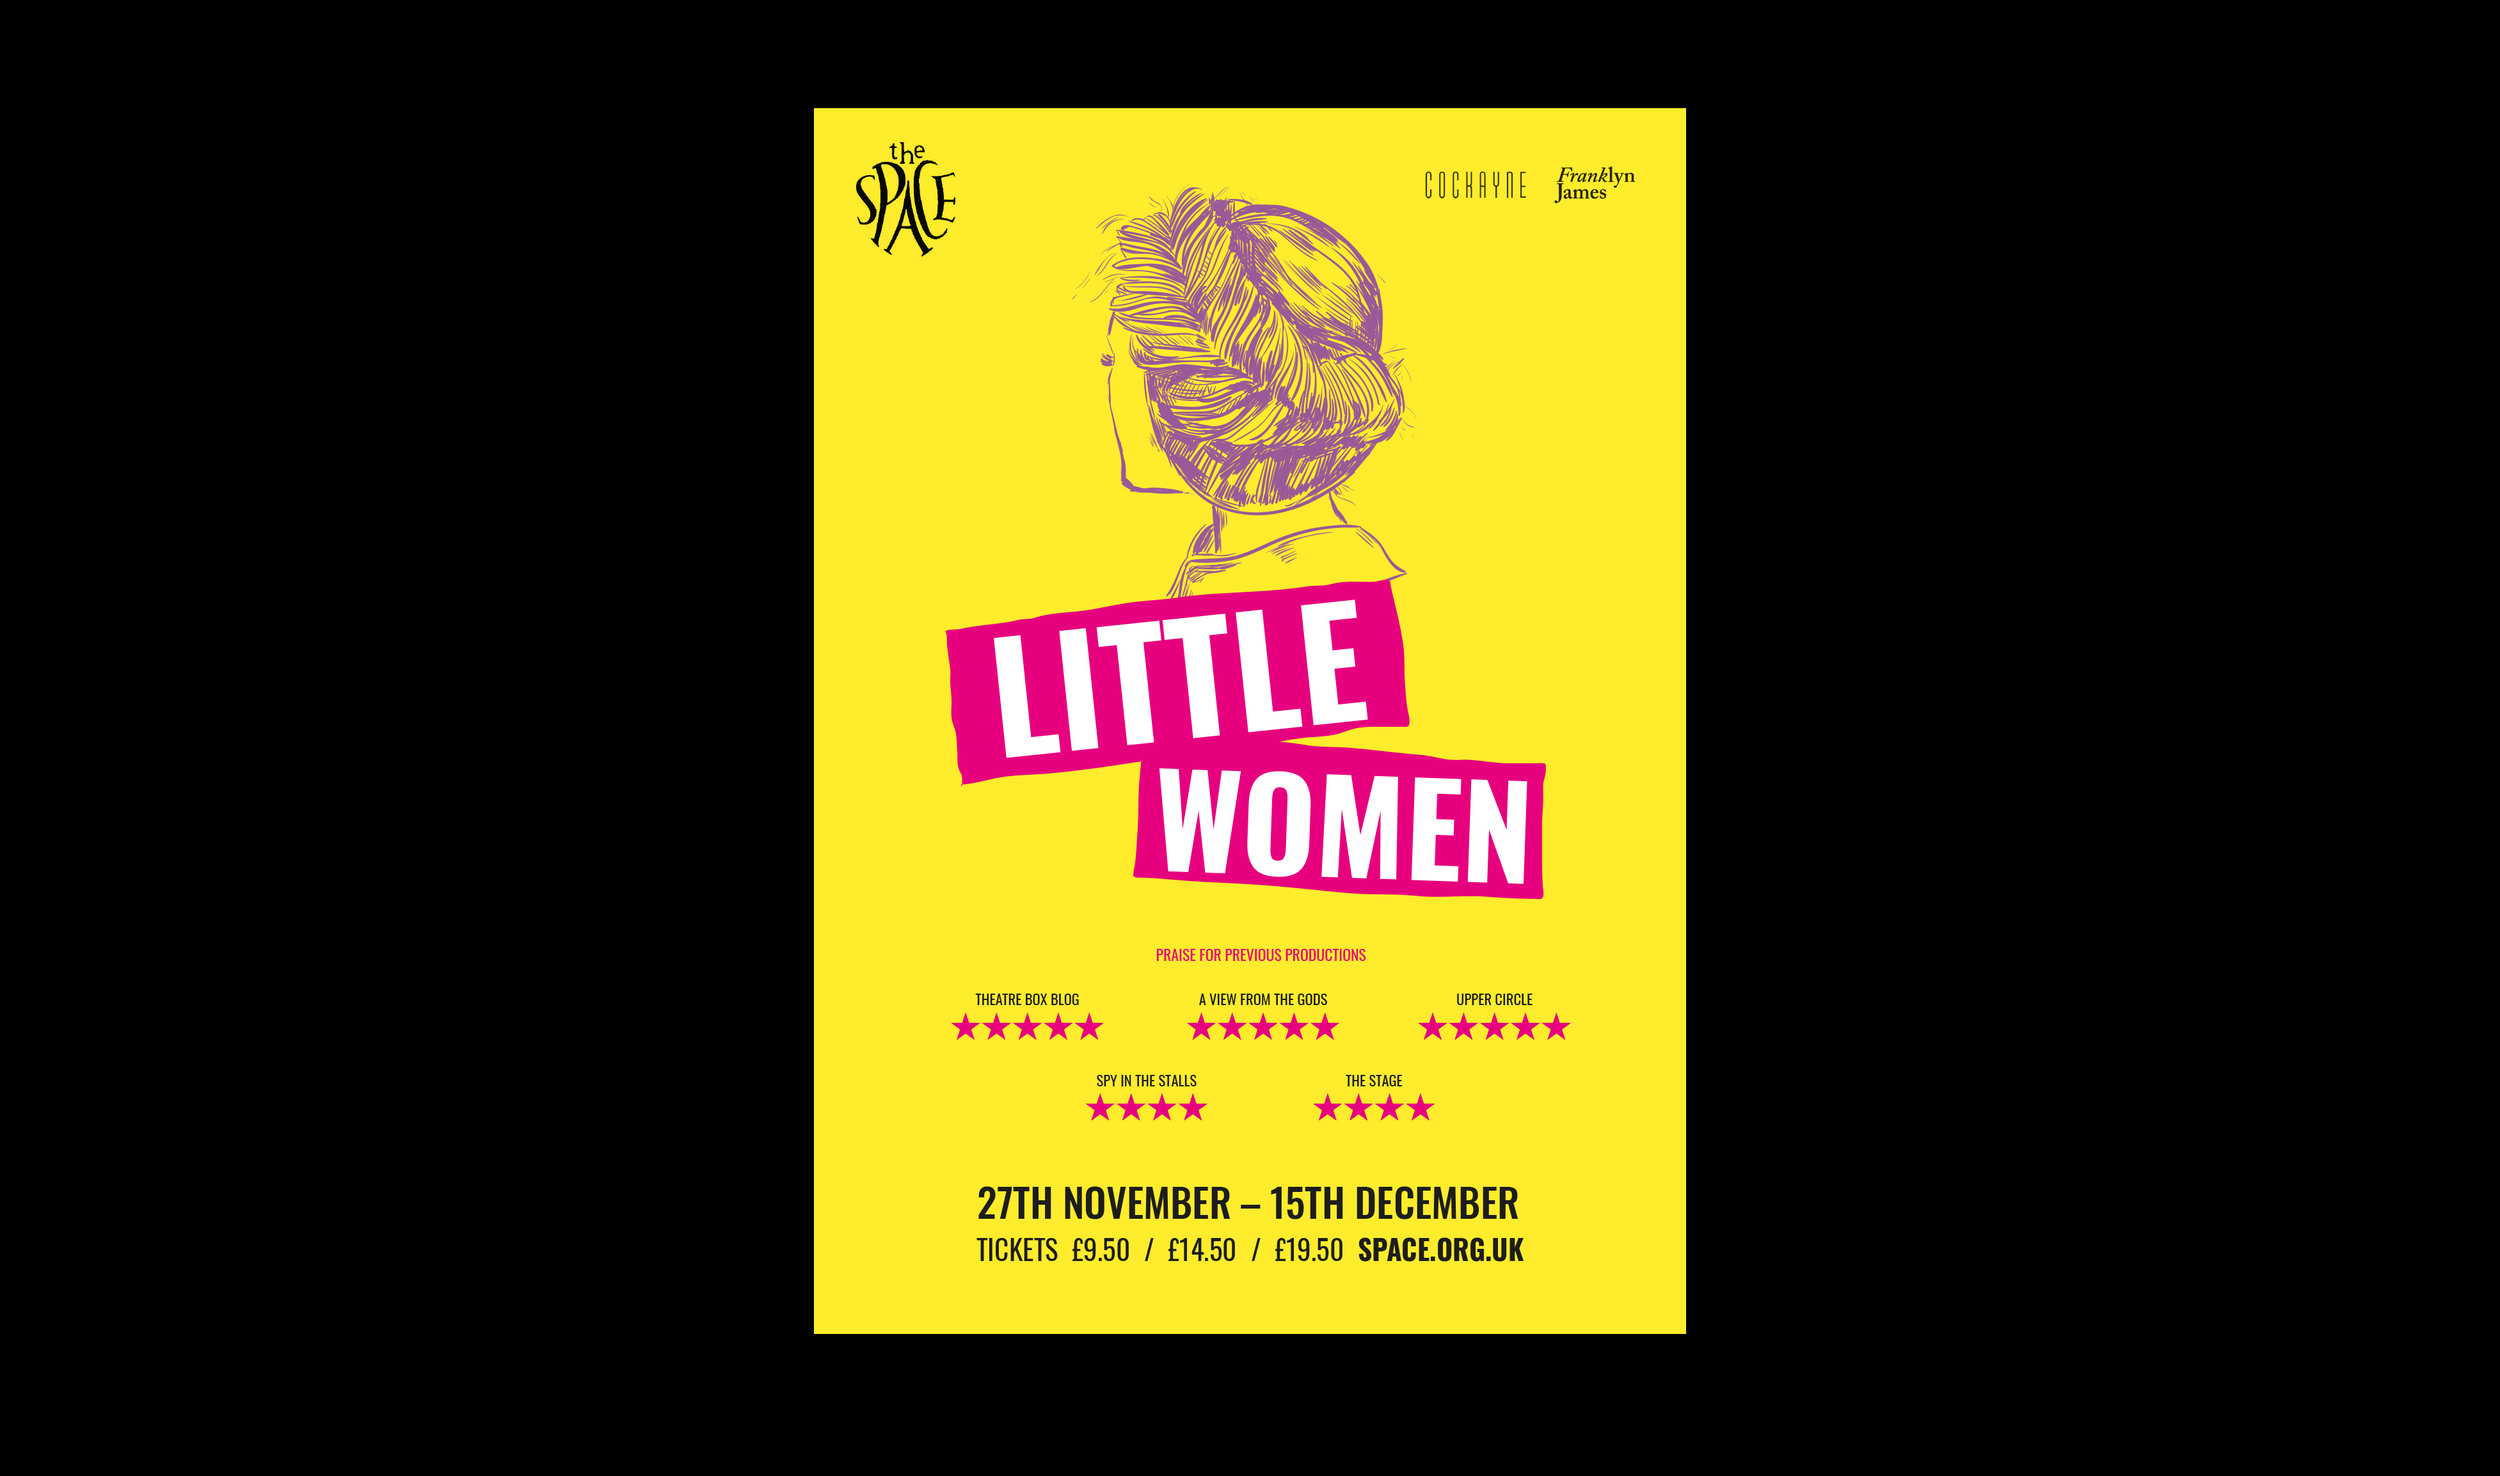 Little women poster.jpg